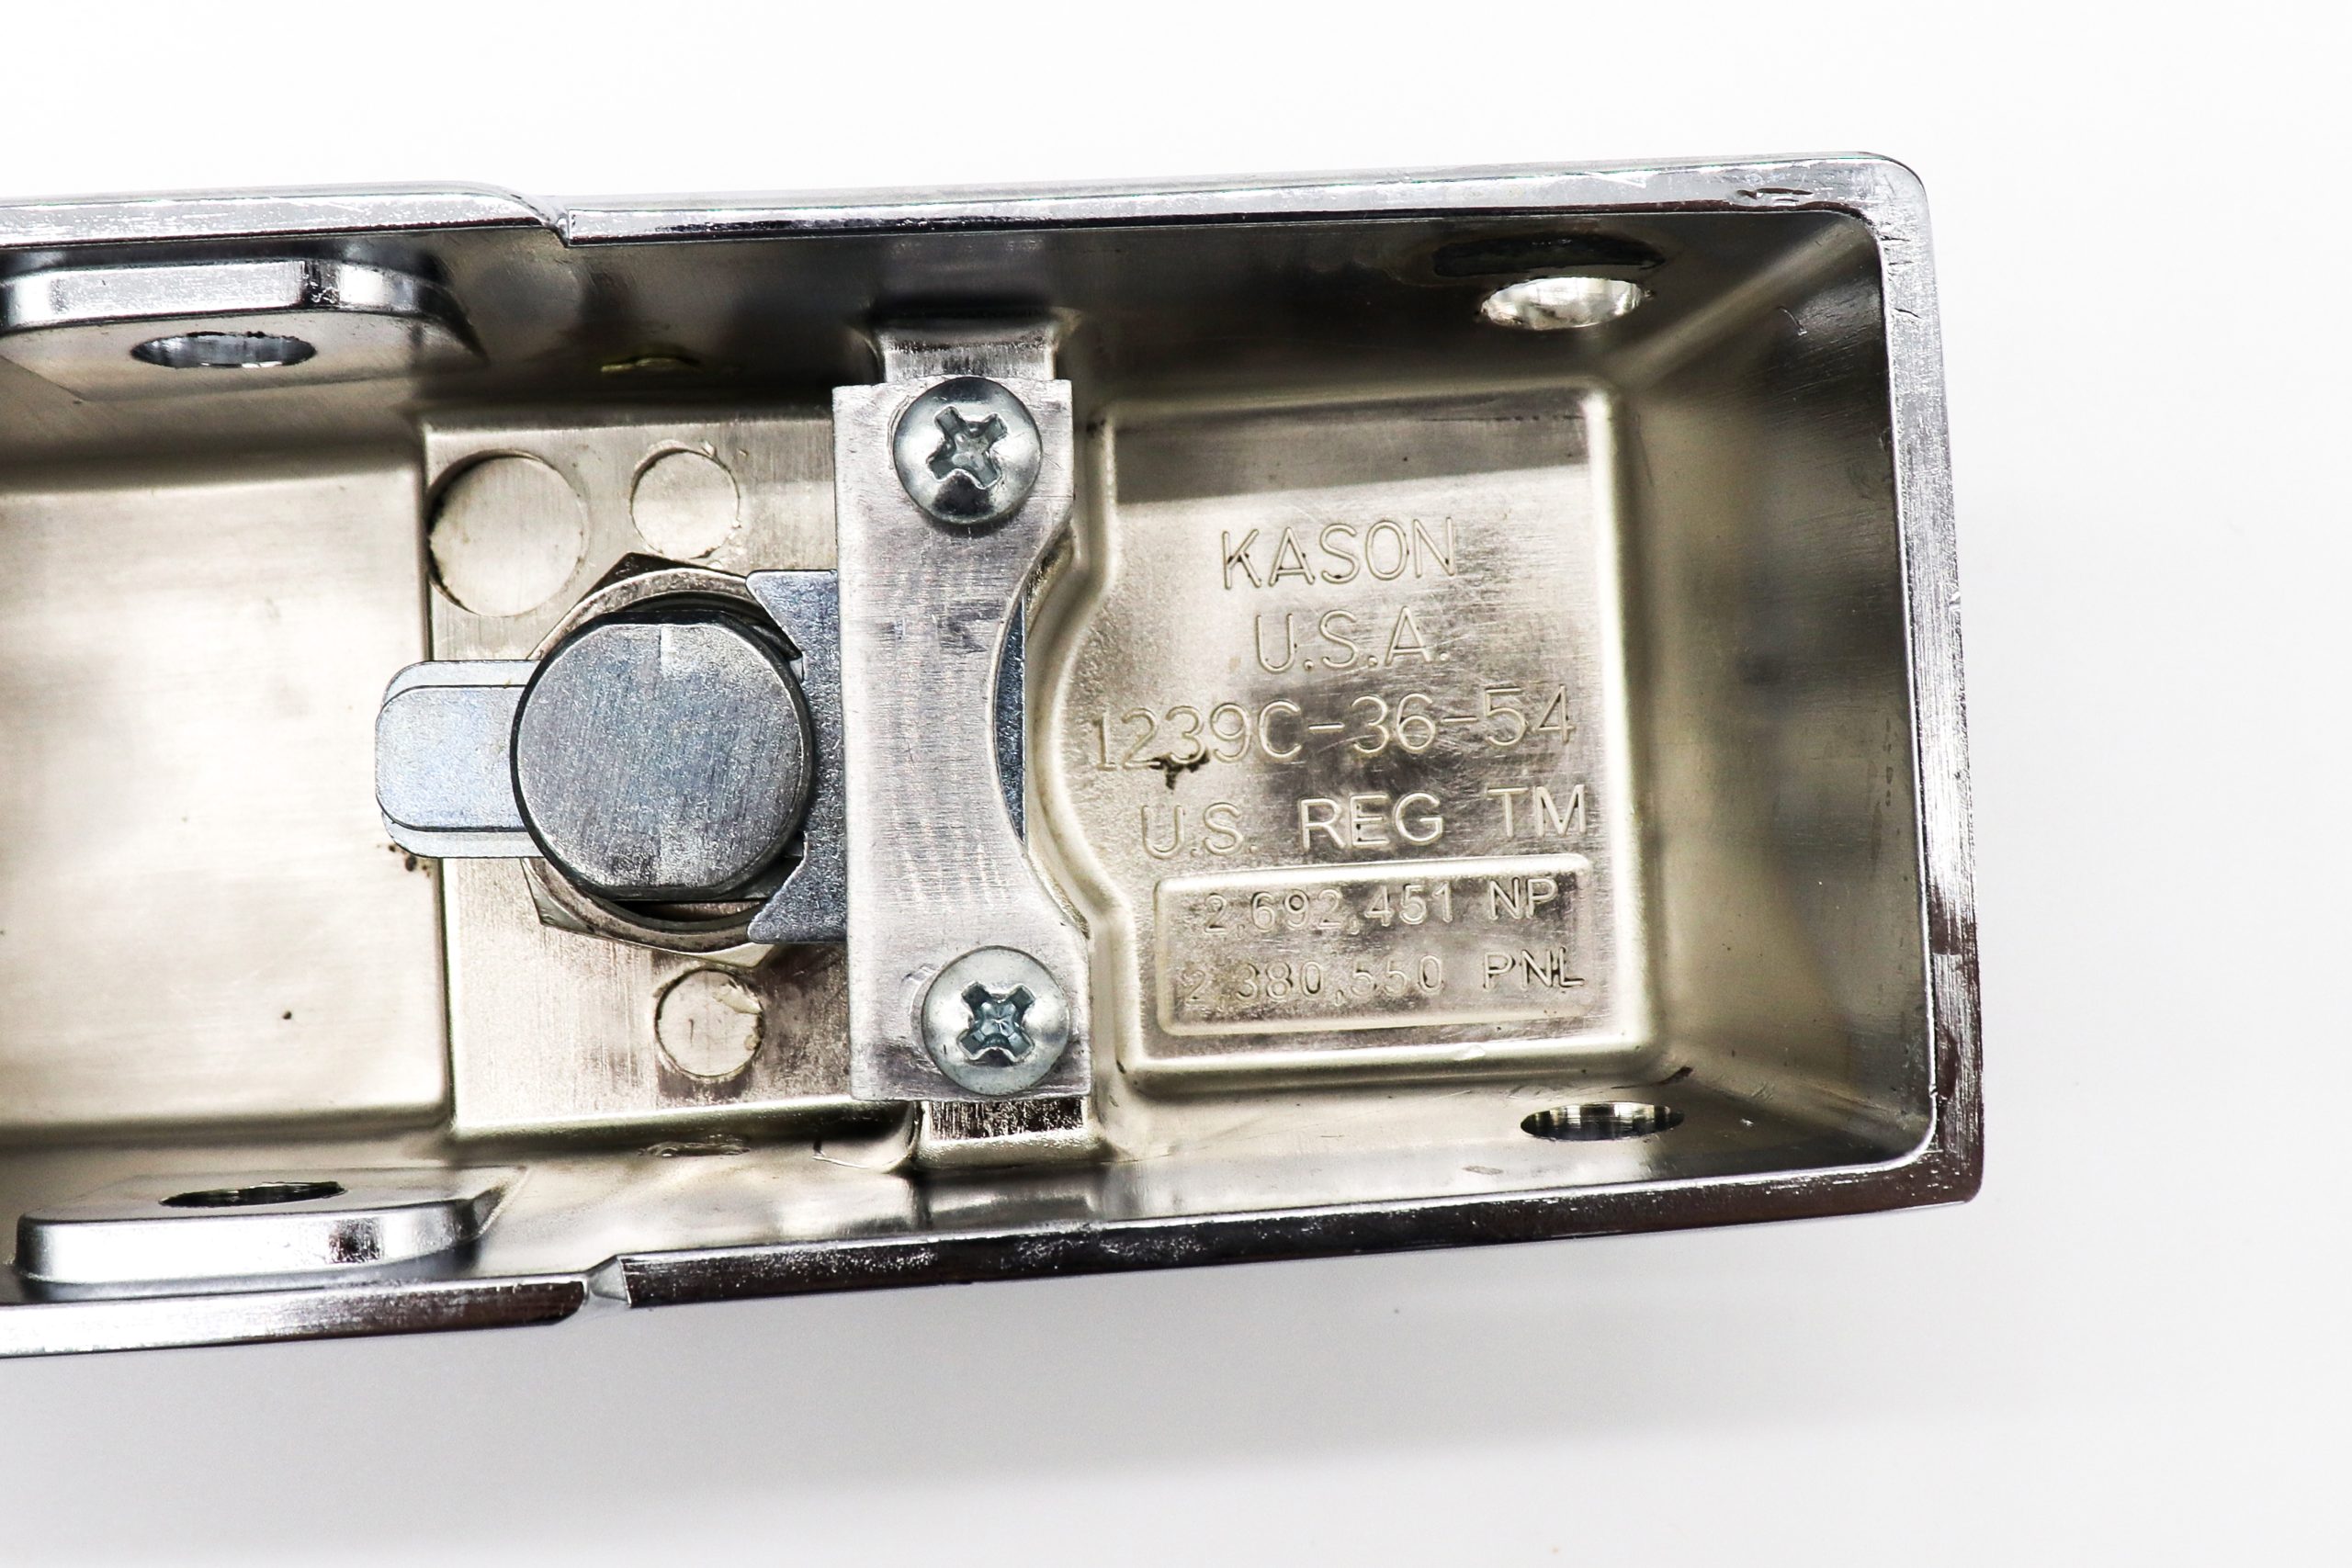 KASON 0056 POLISHED CHROME LOCKING HANDLE KIT WITH 3/4 TO 1 1/2 STRIKE,  0481 6 INSIDE RELEASE, AND HARDWARE KIT